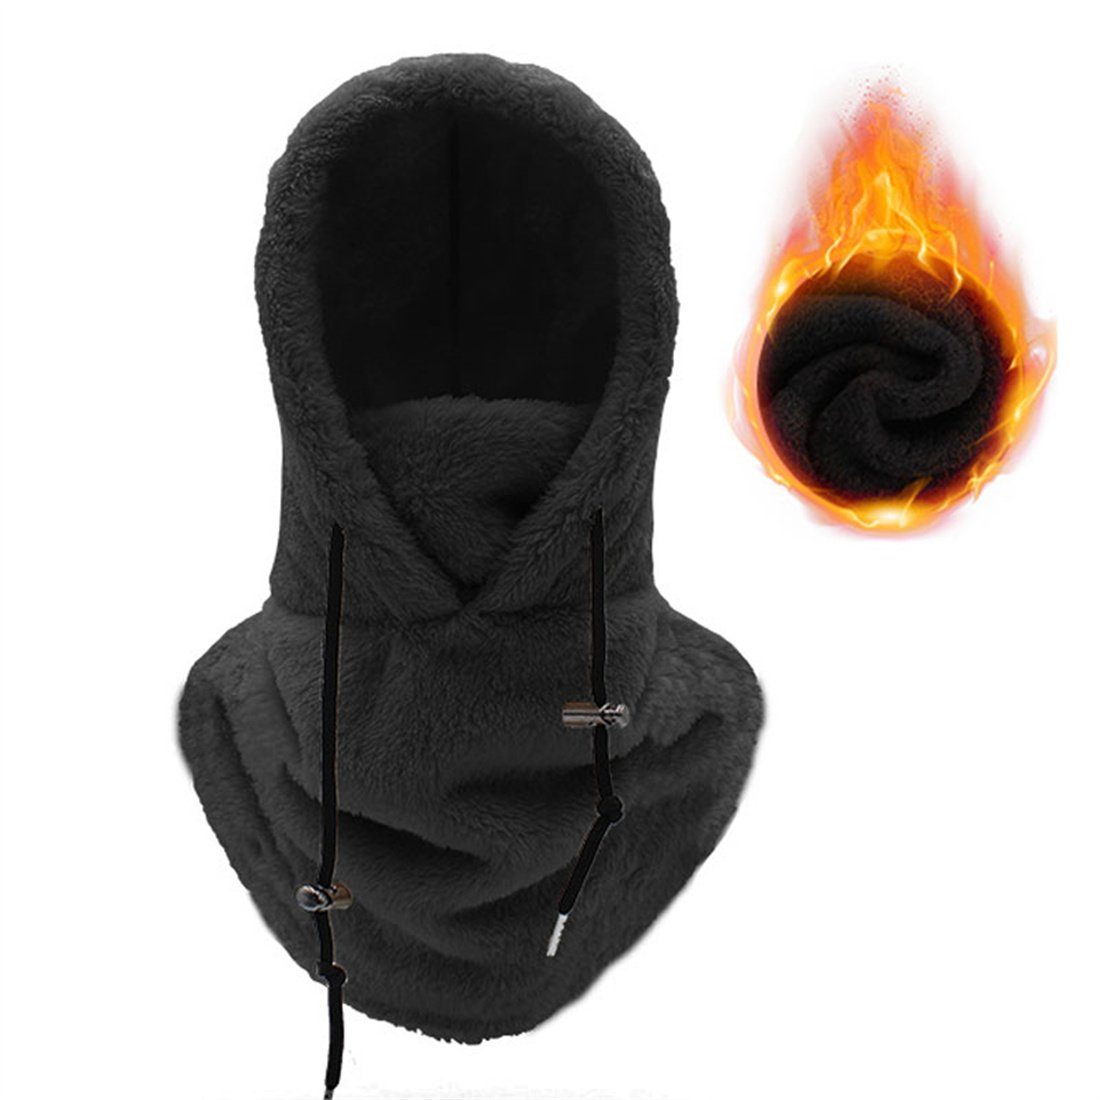 DÖRÖY Sturmhaube Winter Reiten Windproof Maske,Multifunktionale Warme Ski Kopfbedeckung Schwarz